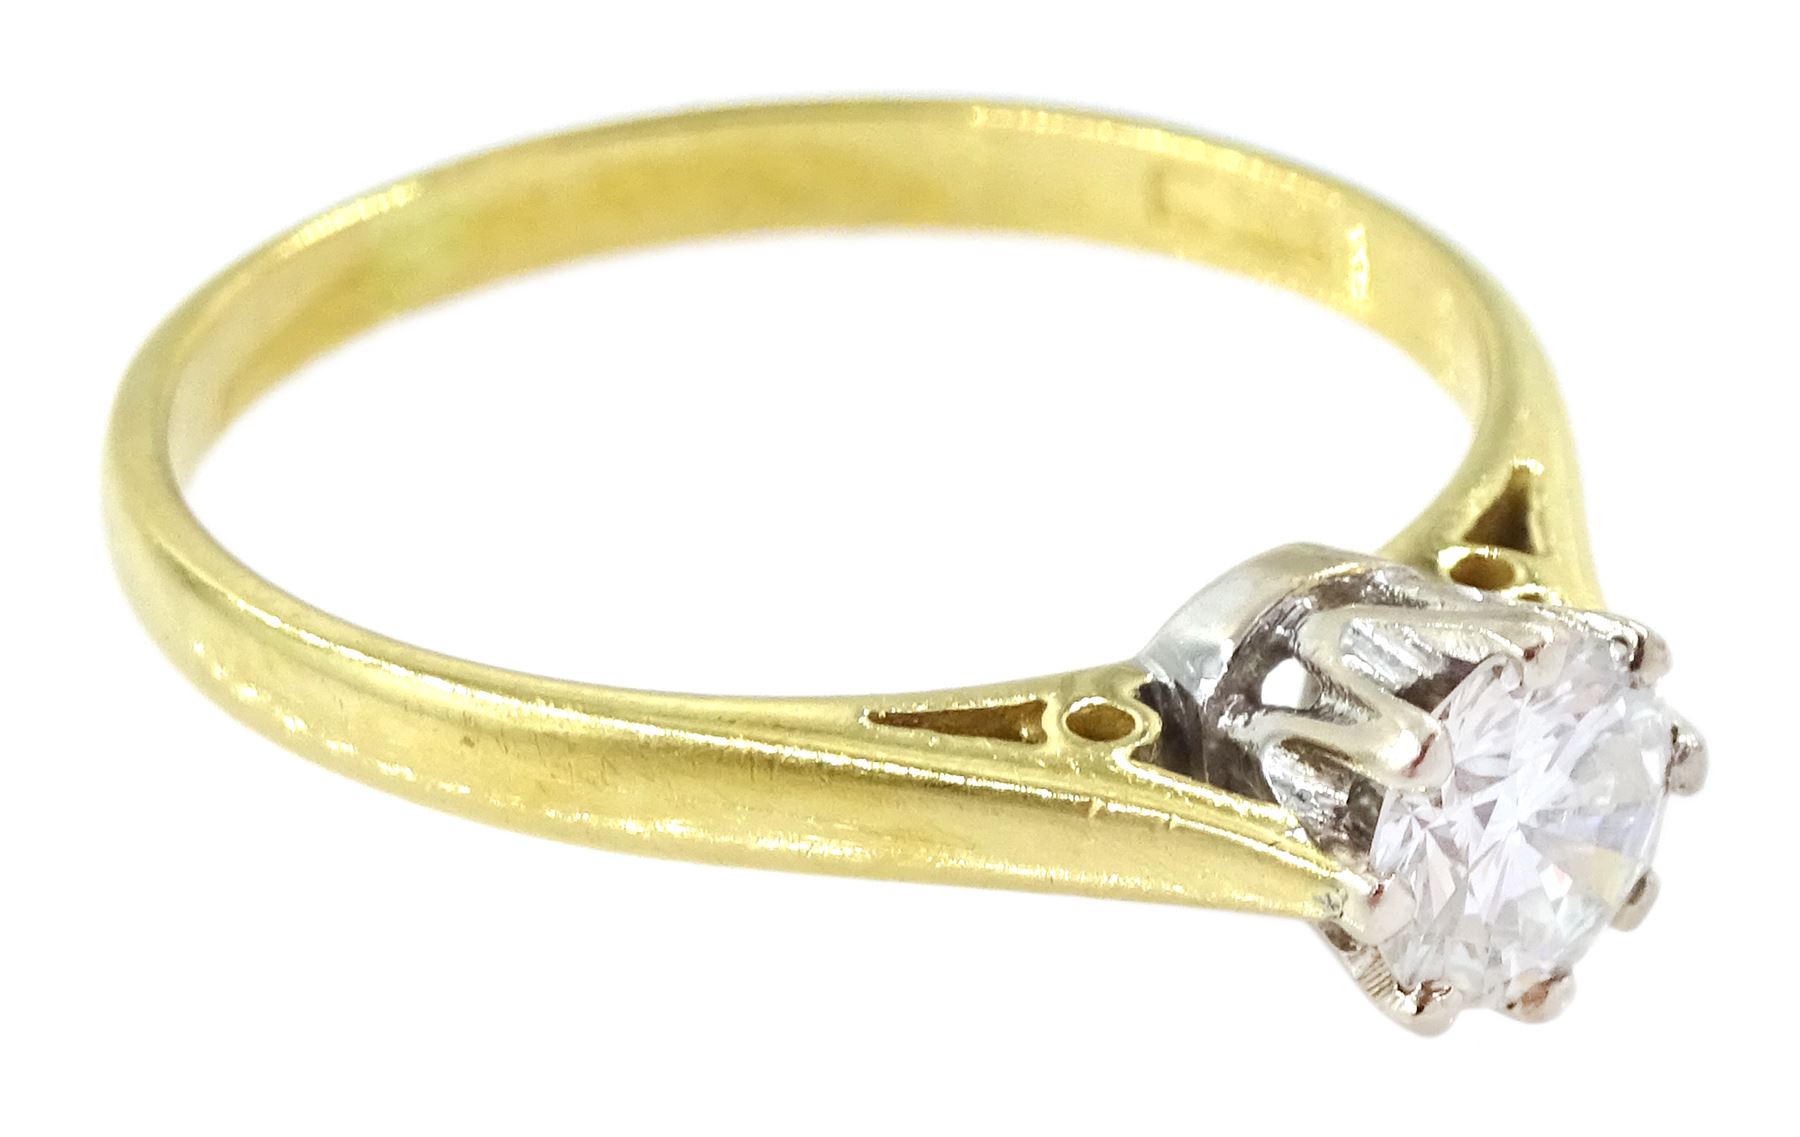 18ct gold single stone round brilliant cut diamond ring - Image 3 of 4